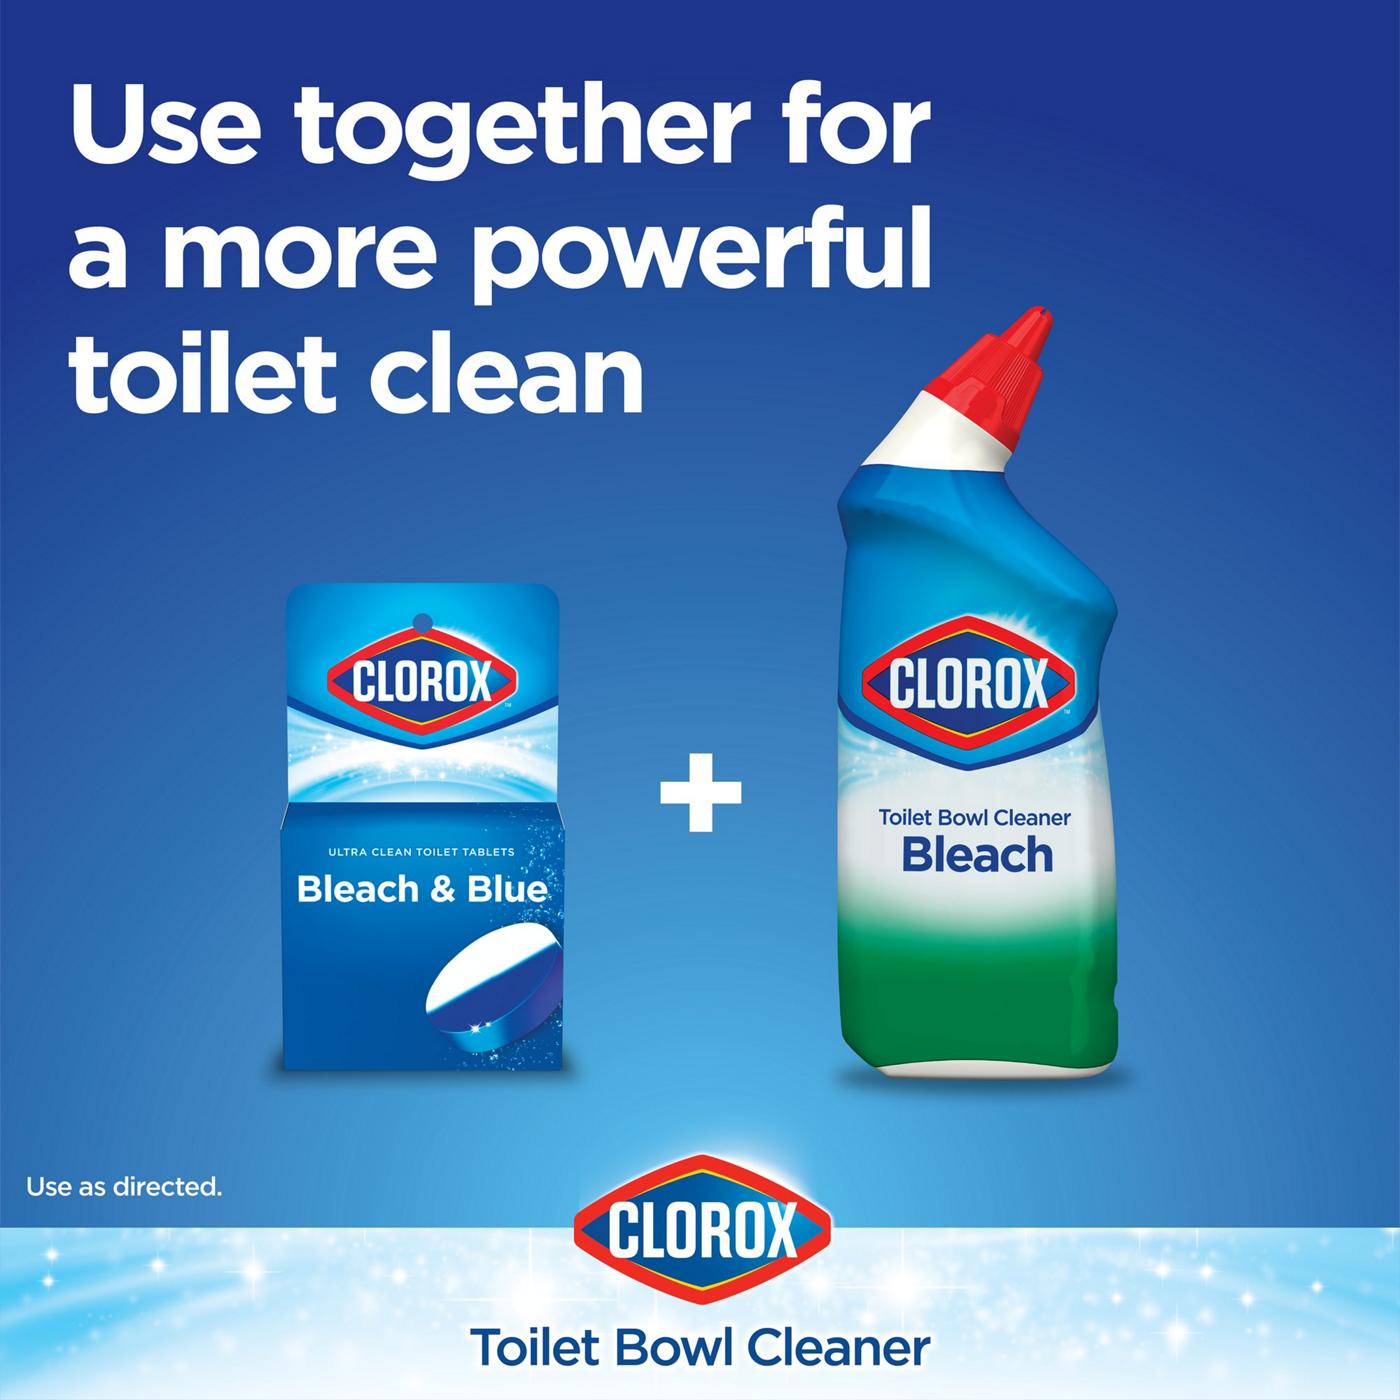 Clorox Bleach & Blue Ultra Clean Toilet Tablets Rain Clean Scent; image 4 of 9